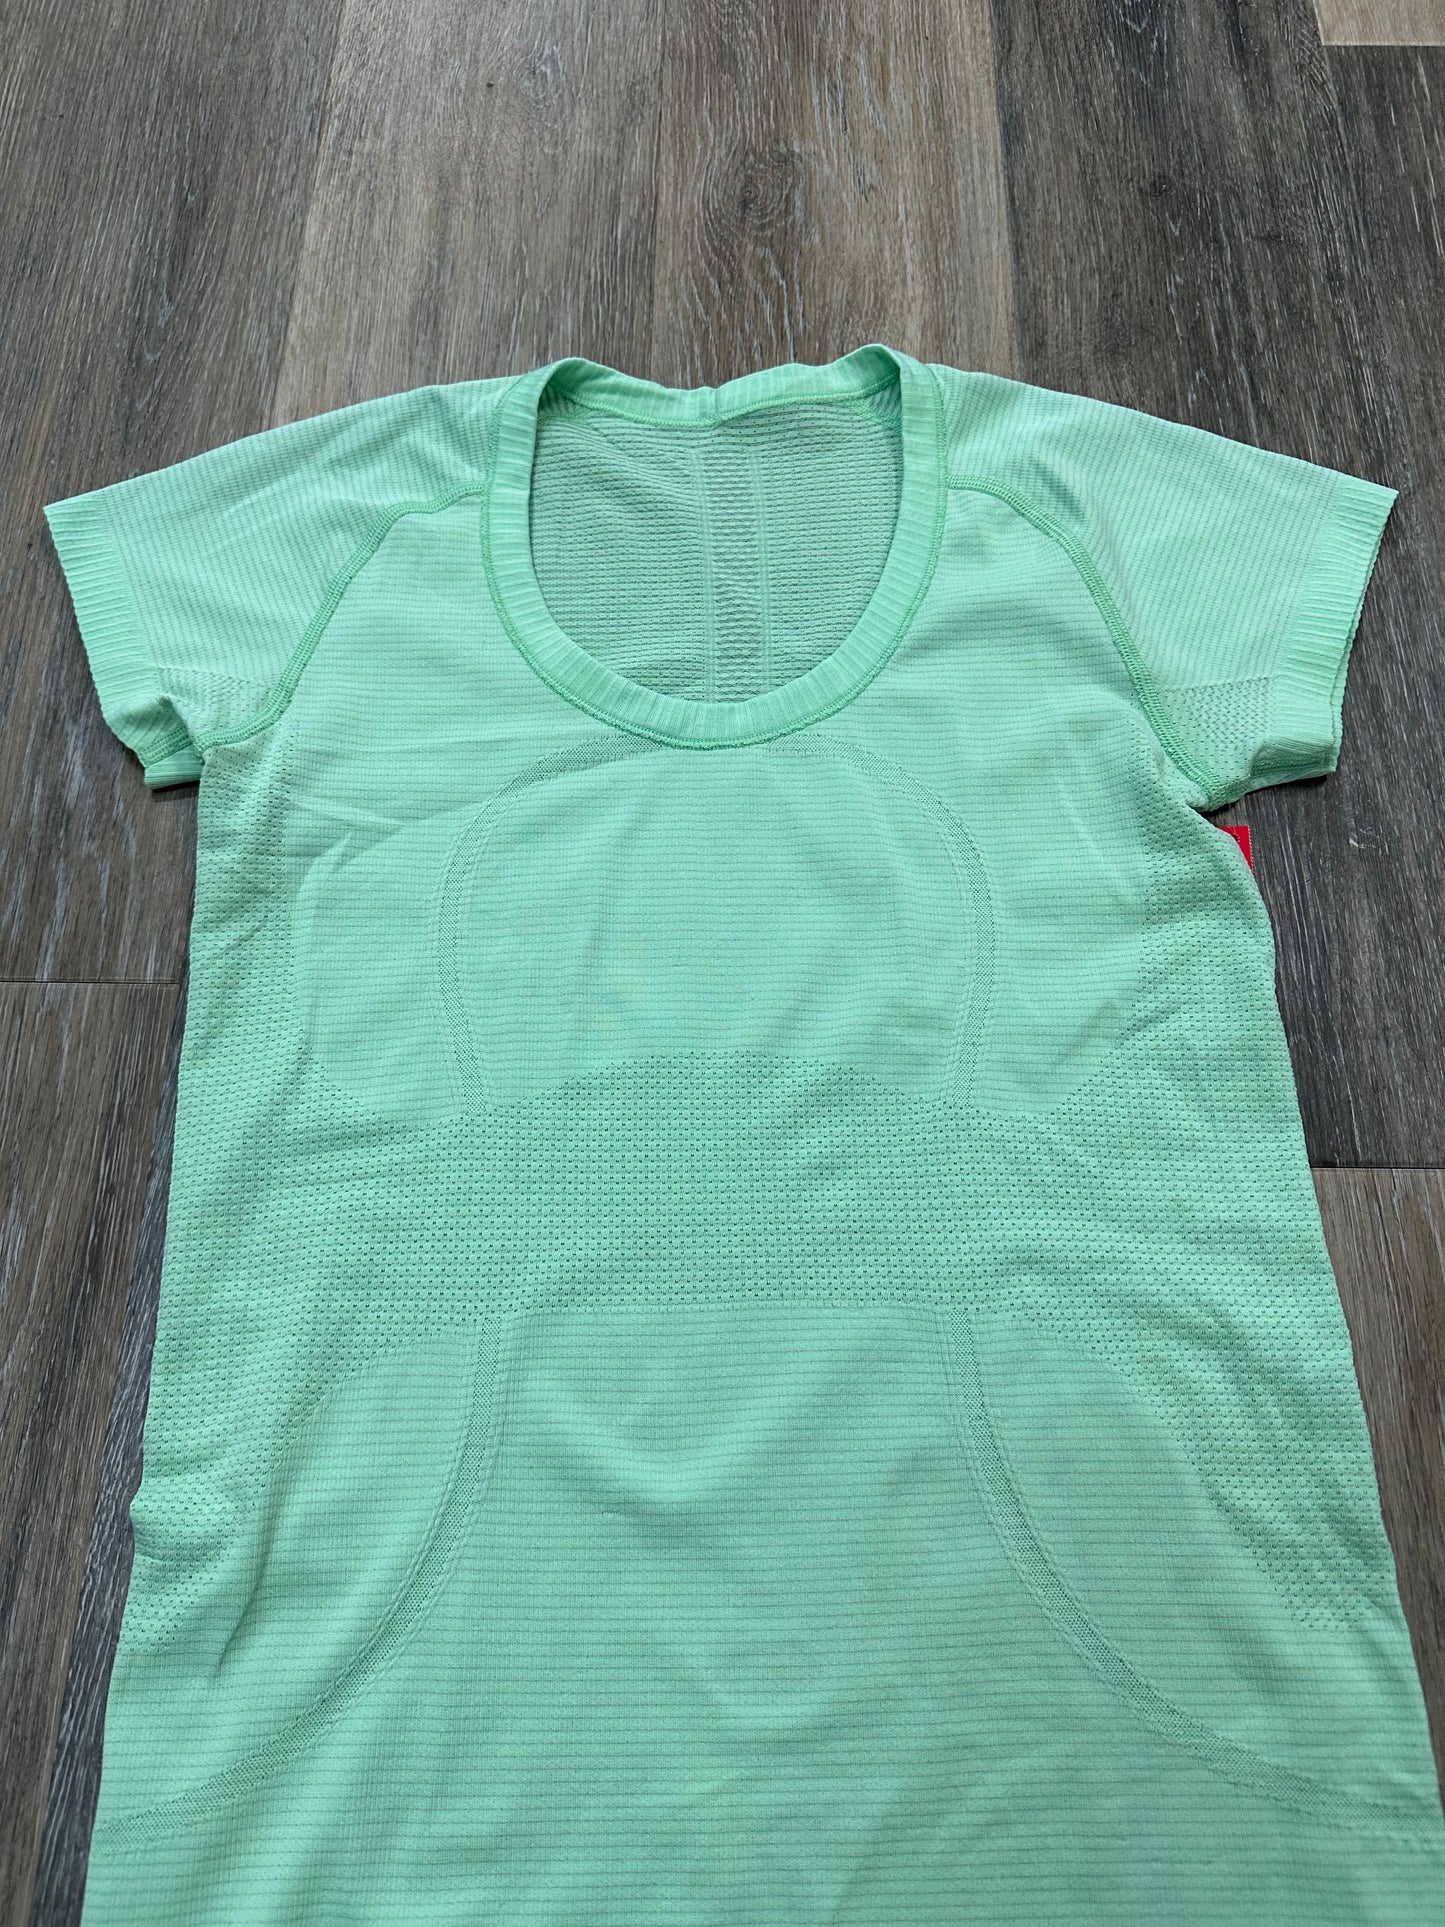 Athletic Top Short Sleeve By Lululemon  Size: 6